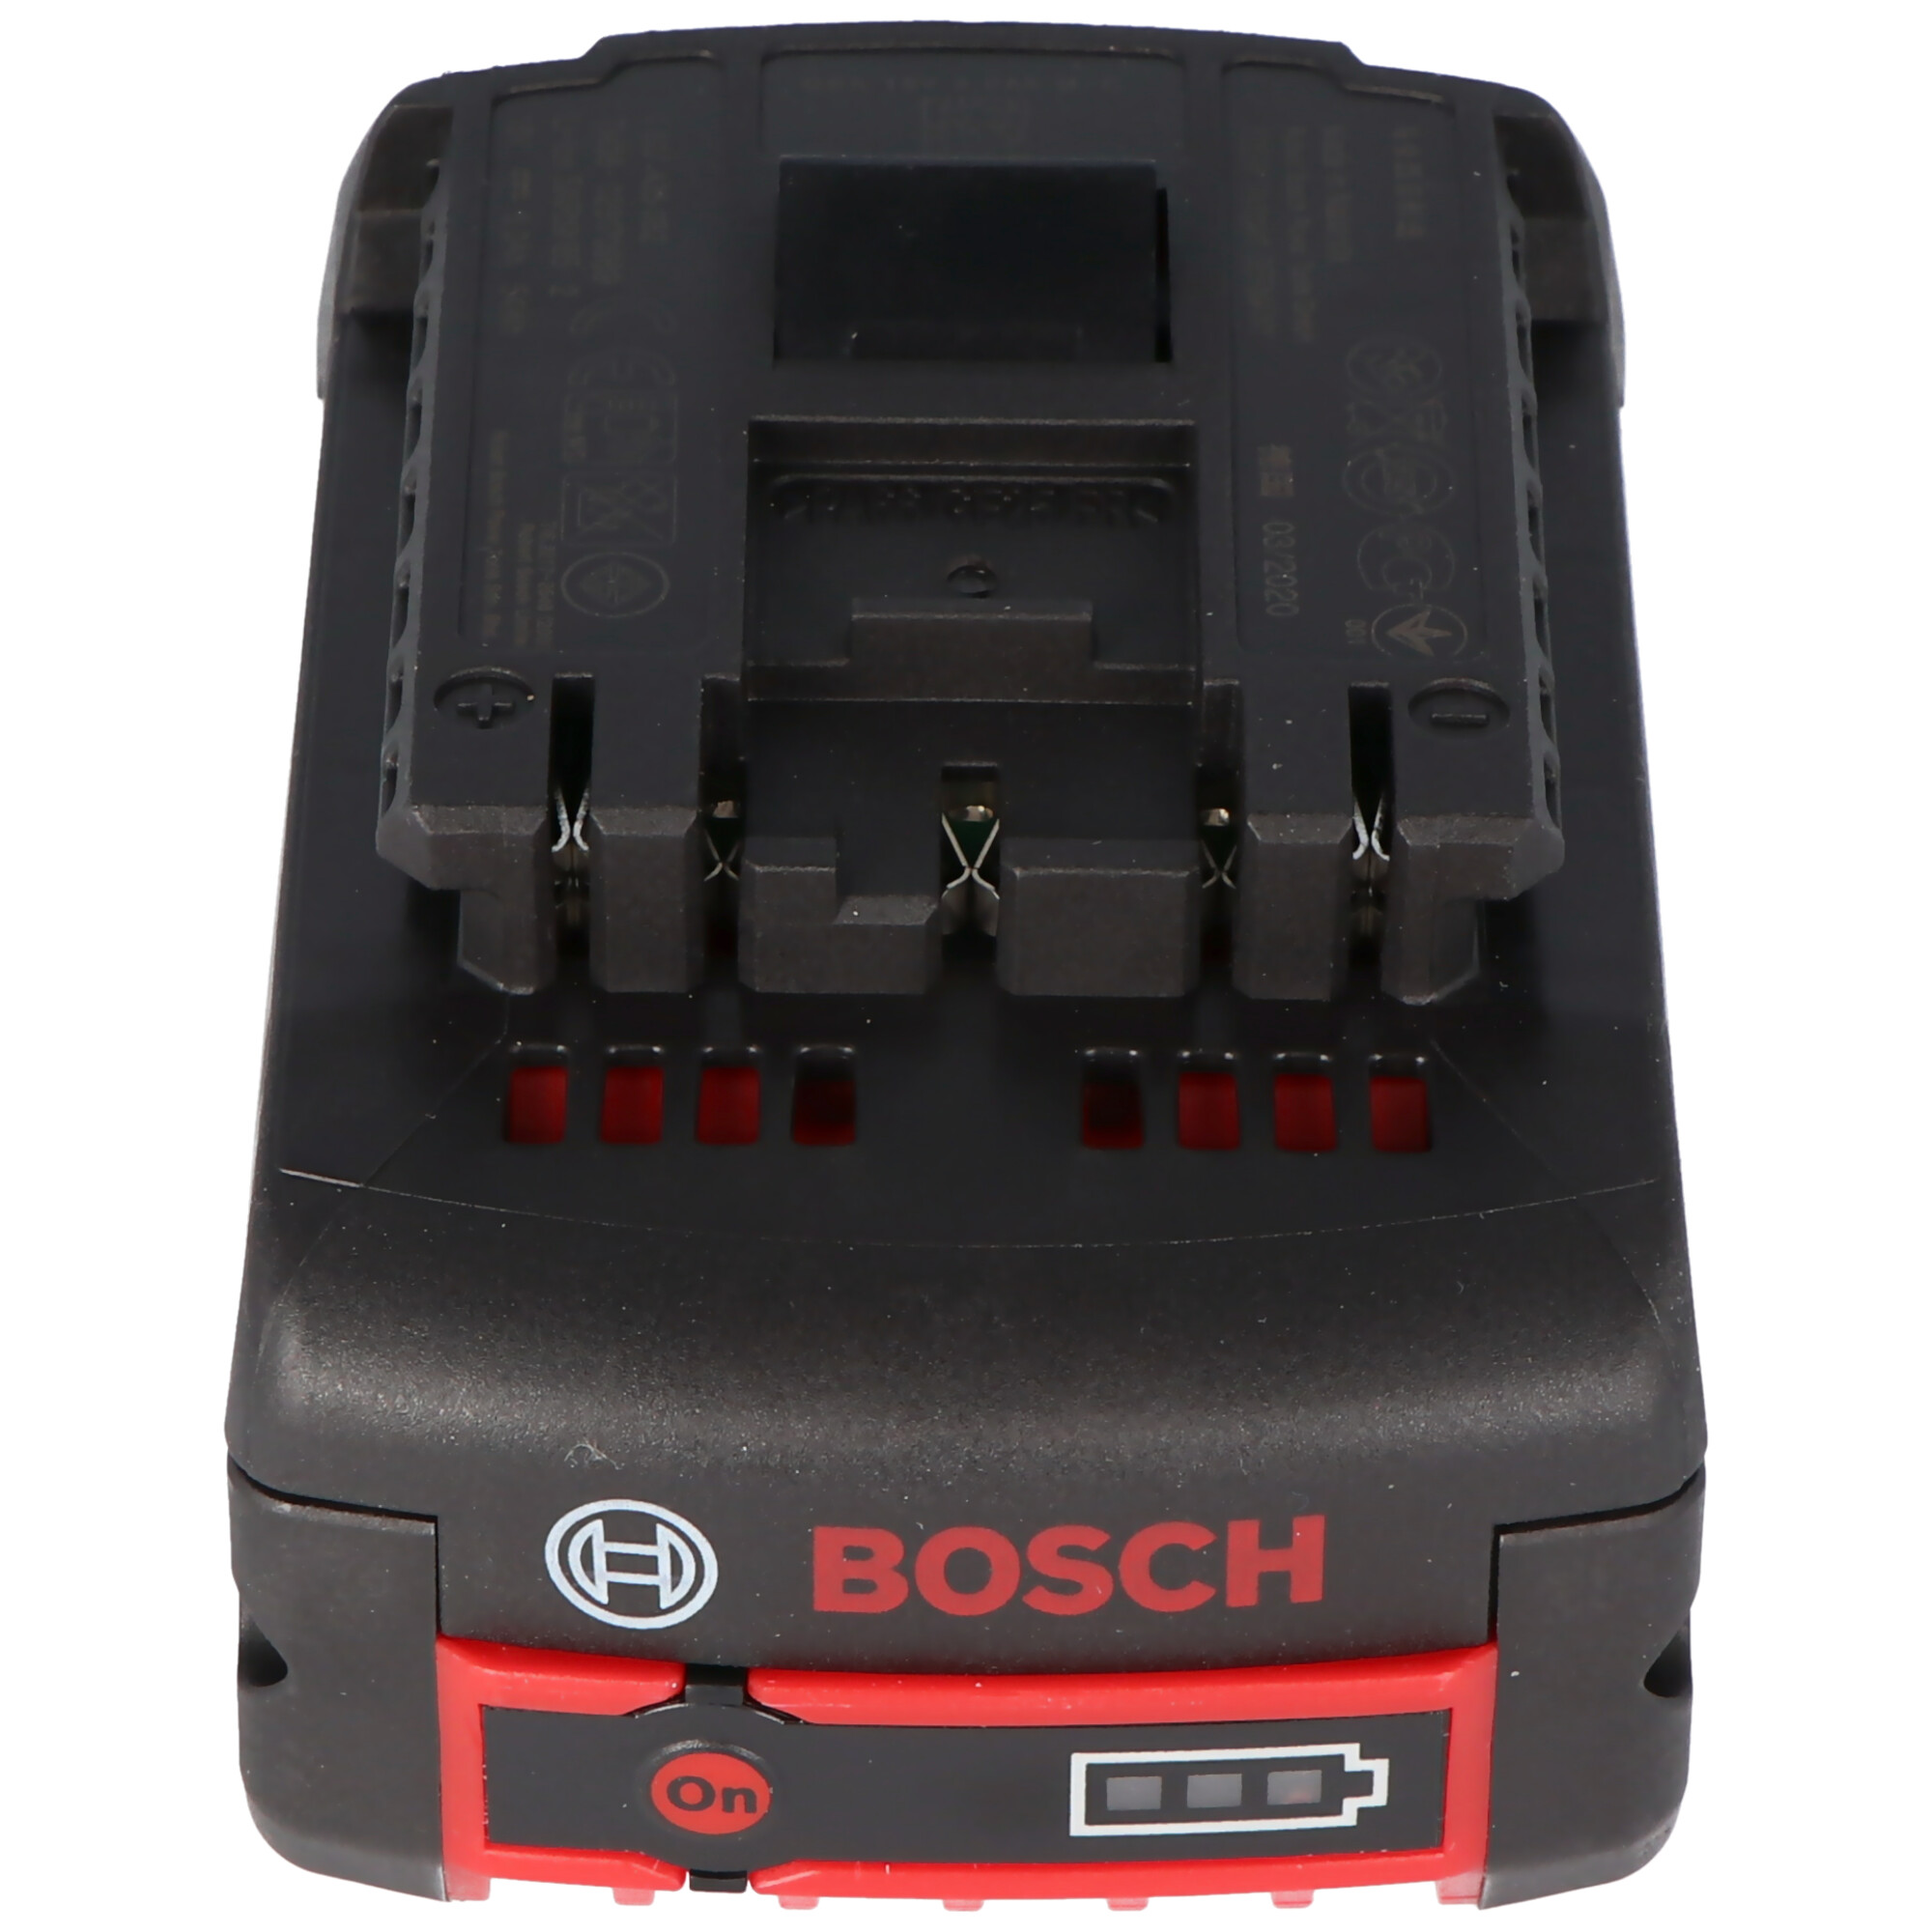 3000mAh Original Bosch GSR 18 V-LI Akku 2607336815, 2607337263, 1600A004ZN mit 18 Volt und 3Ah